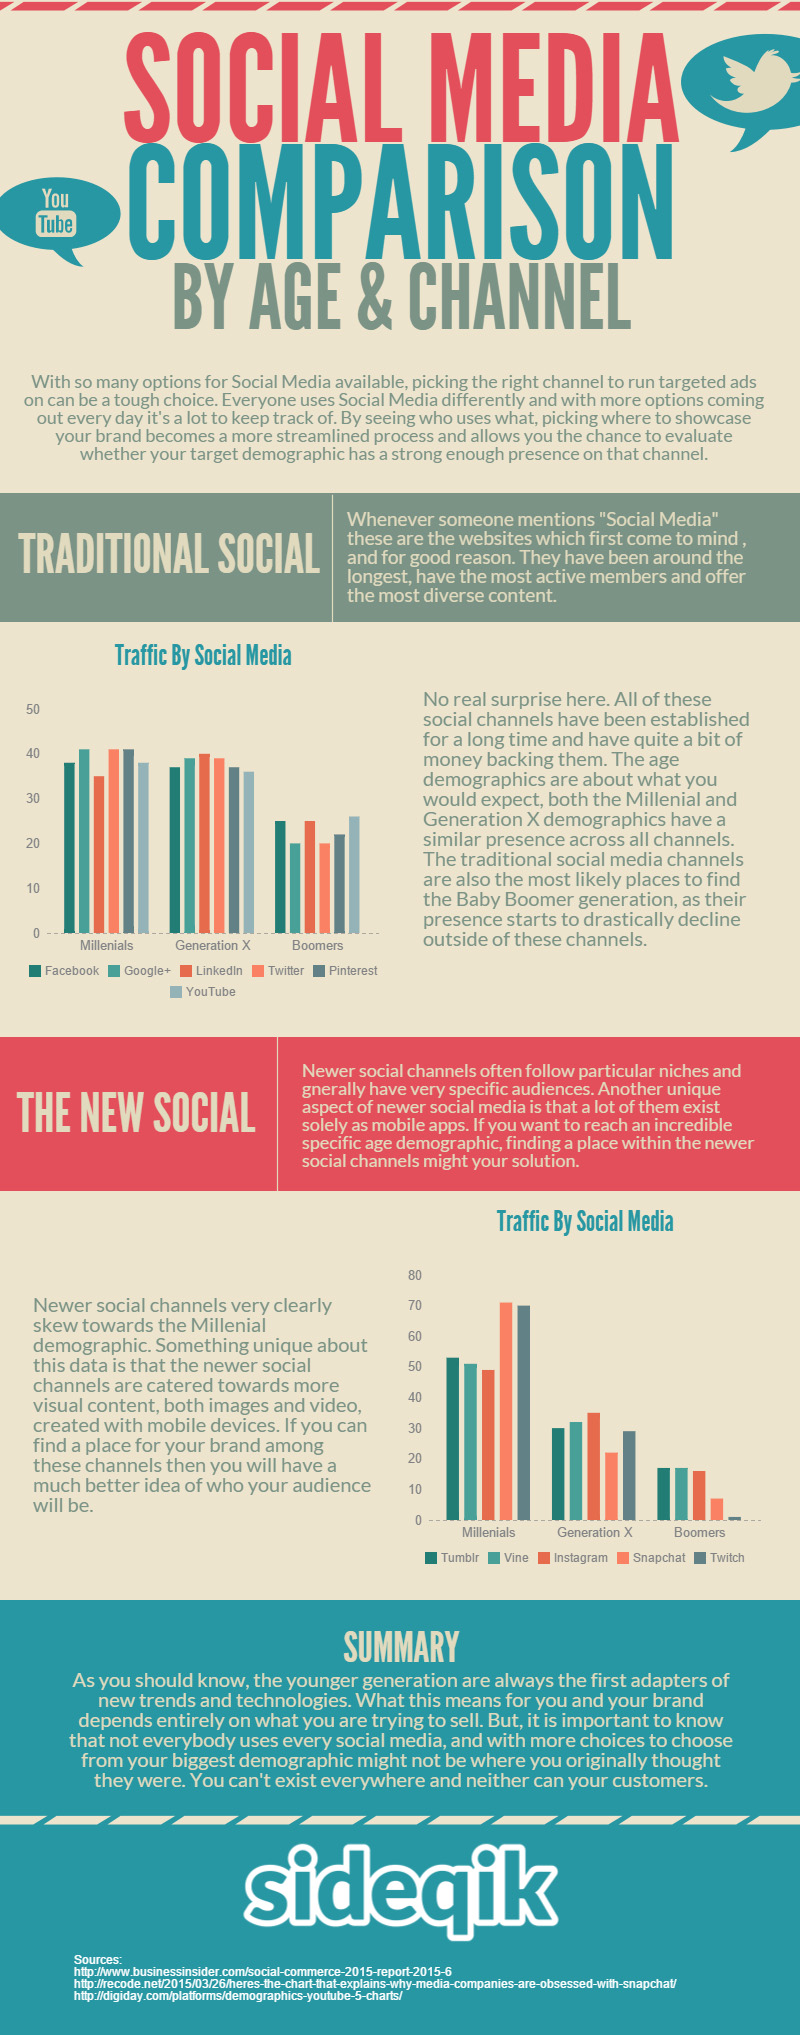 Social Media Publishing: A Mobile App Comparison (Infographic) - Business 2 Community